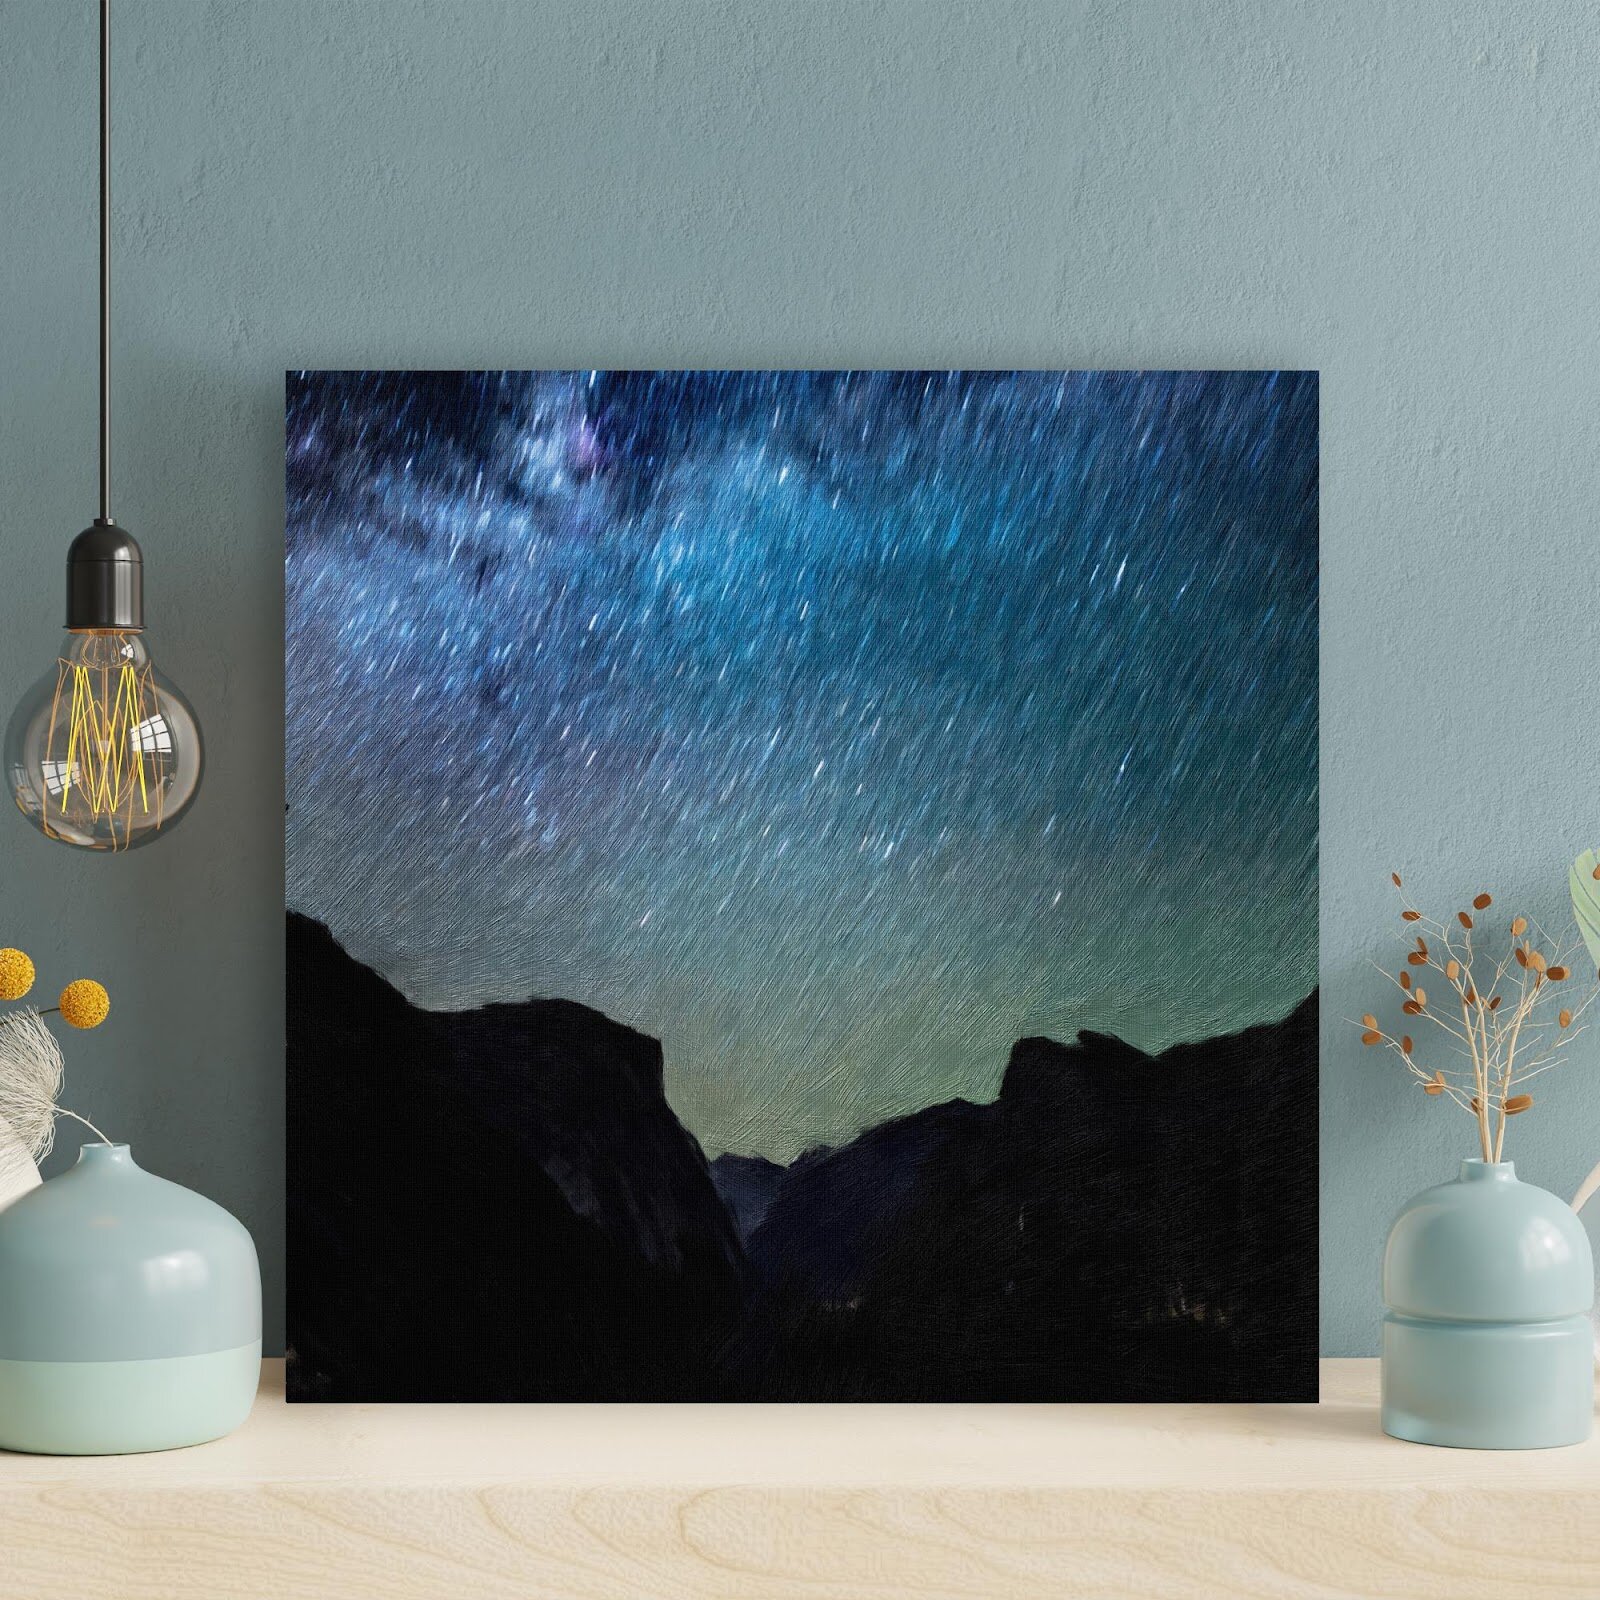 8x8 Canvas Starry Galaxy Night Sky Acrylic Painting on Canvas